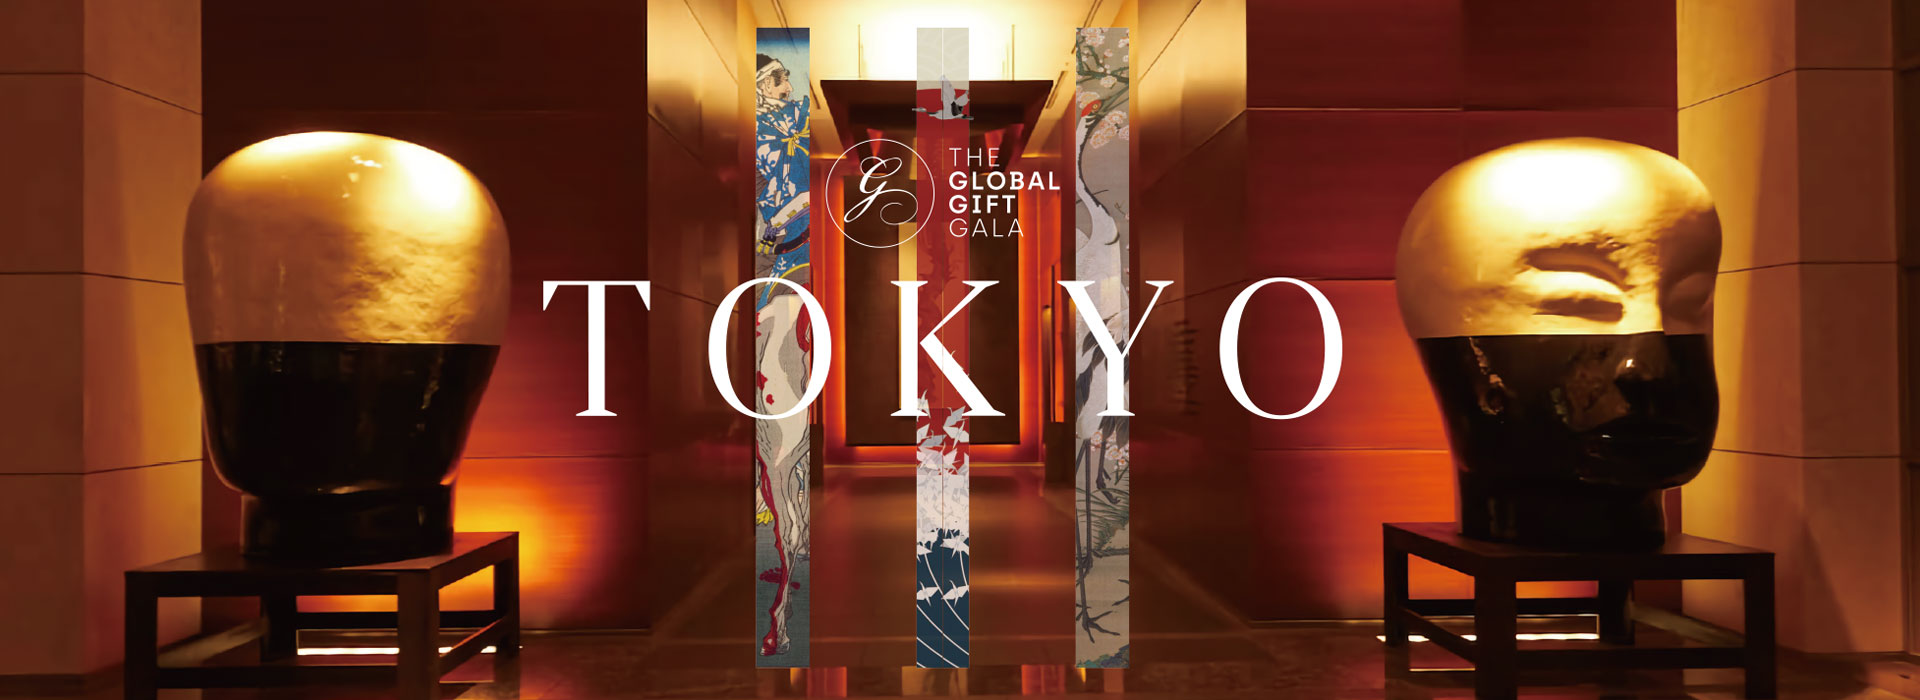 The Global Gift Gala Tokyo